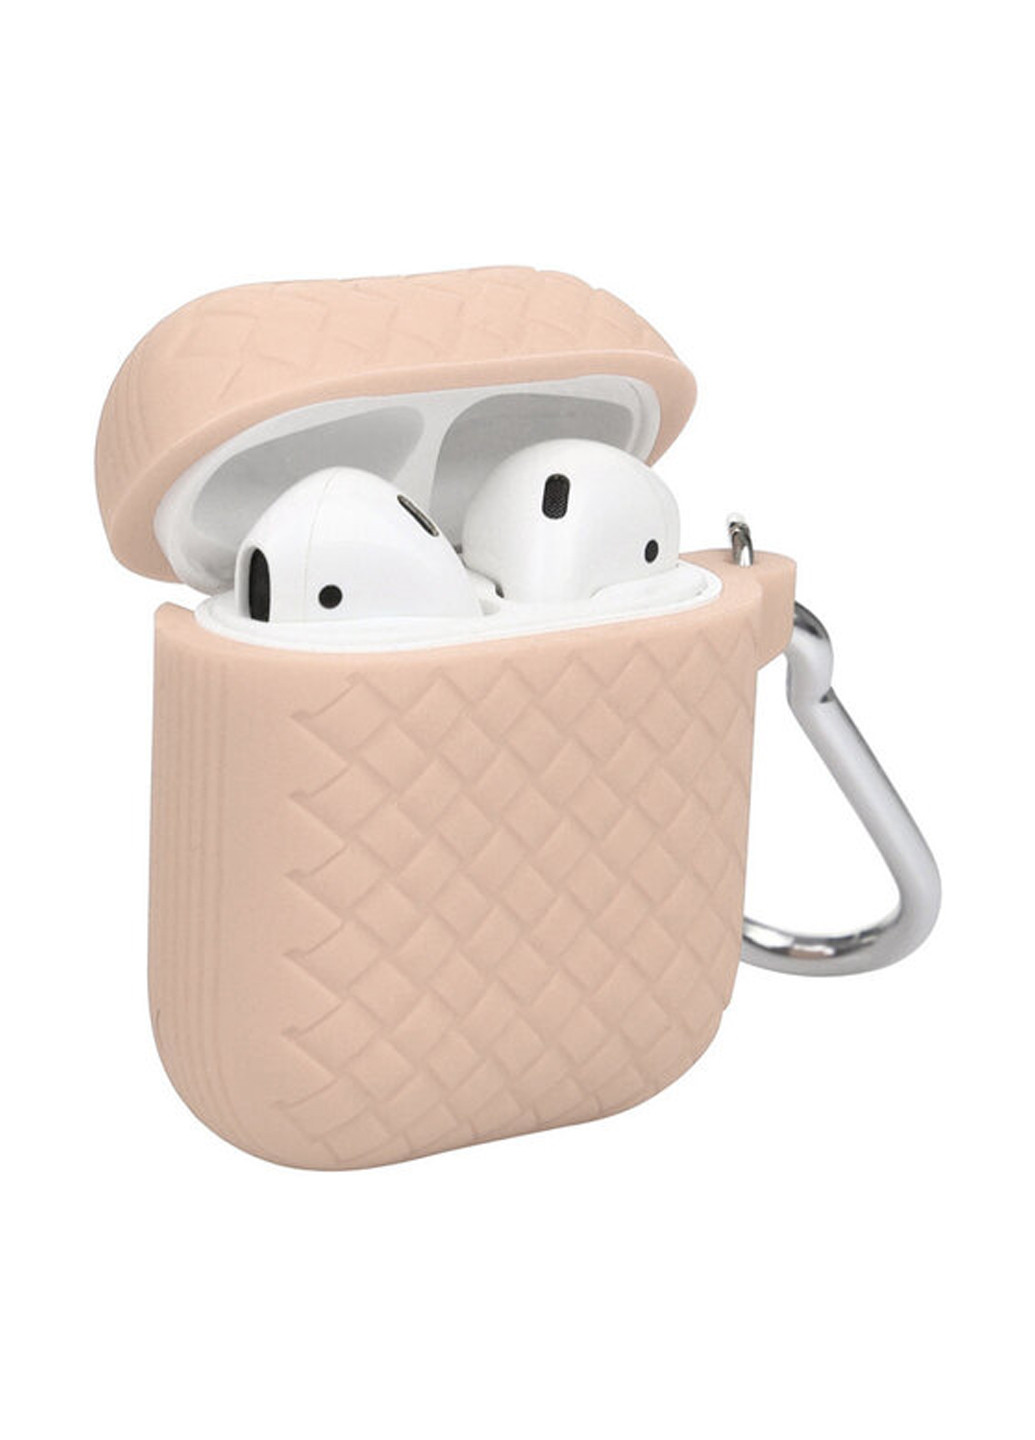 Чехол Weave Series для Apple AirPods IPH1461 Pink (703339) i-Smile weave series для apple airpods iph1461 pink (703339) (144451900)